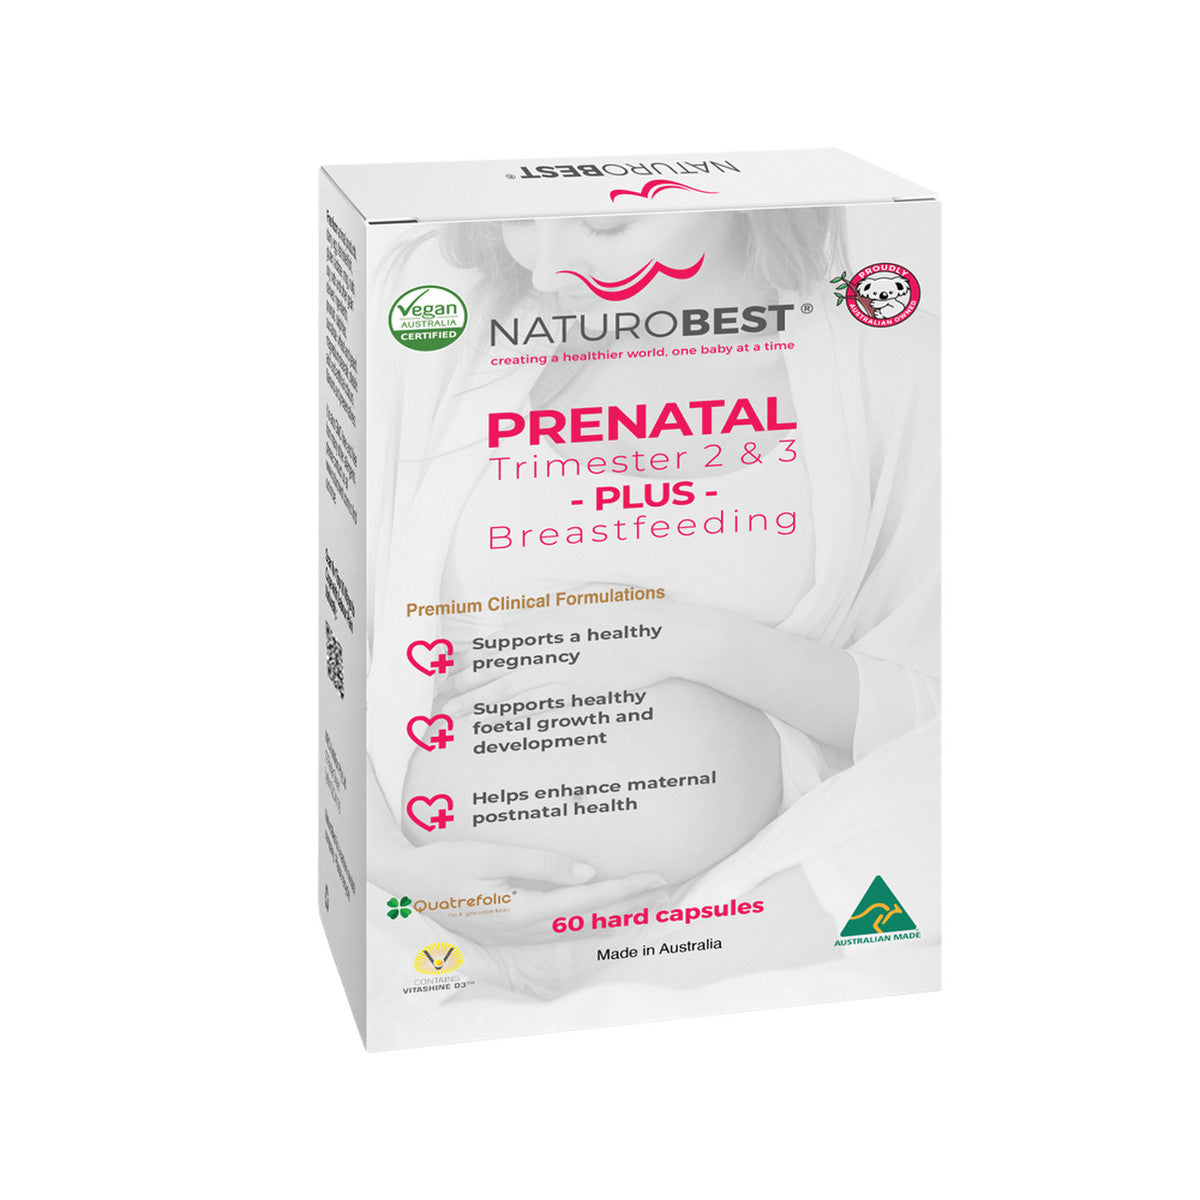 NaturoBest - Prenatal Trimester 2 and 3 Plus Breastfeeding